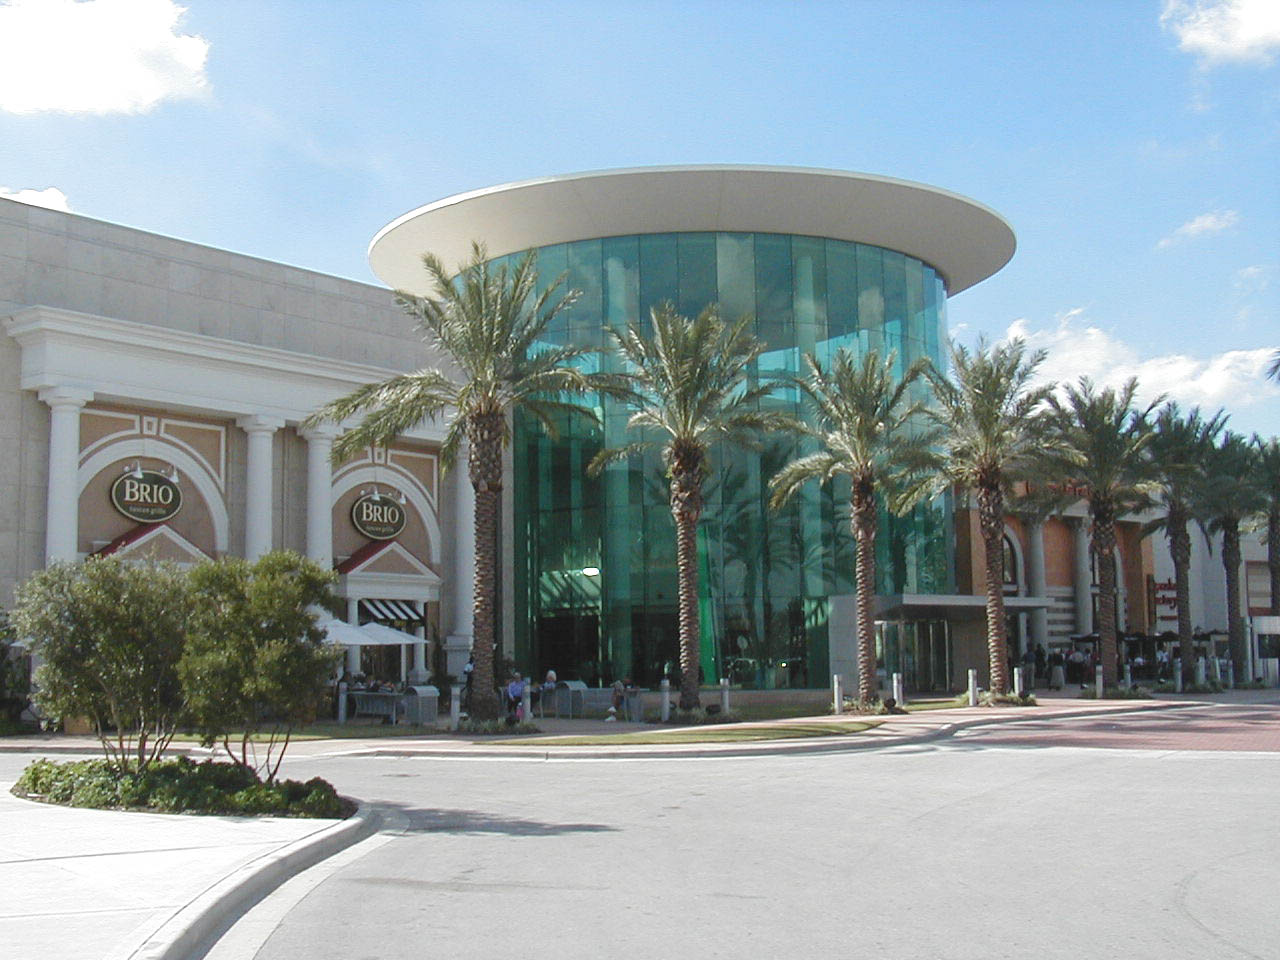 Louis Vuitton Men's at the Mall at Millenia - Orlando, FL